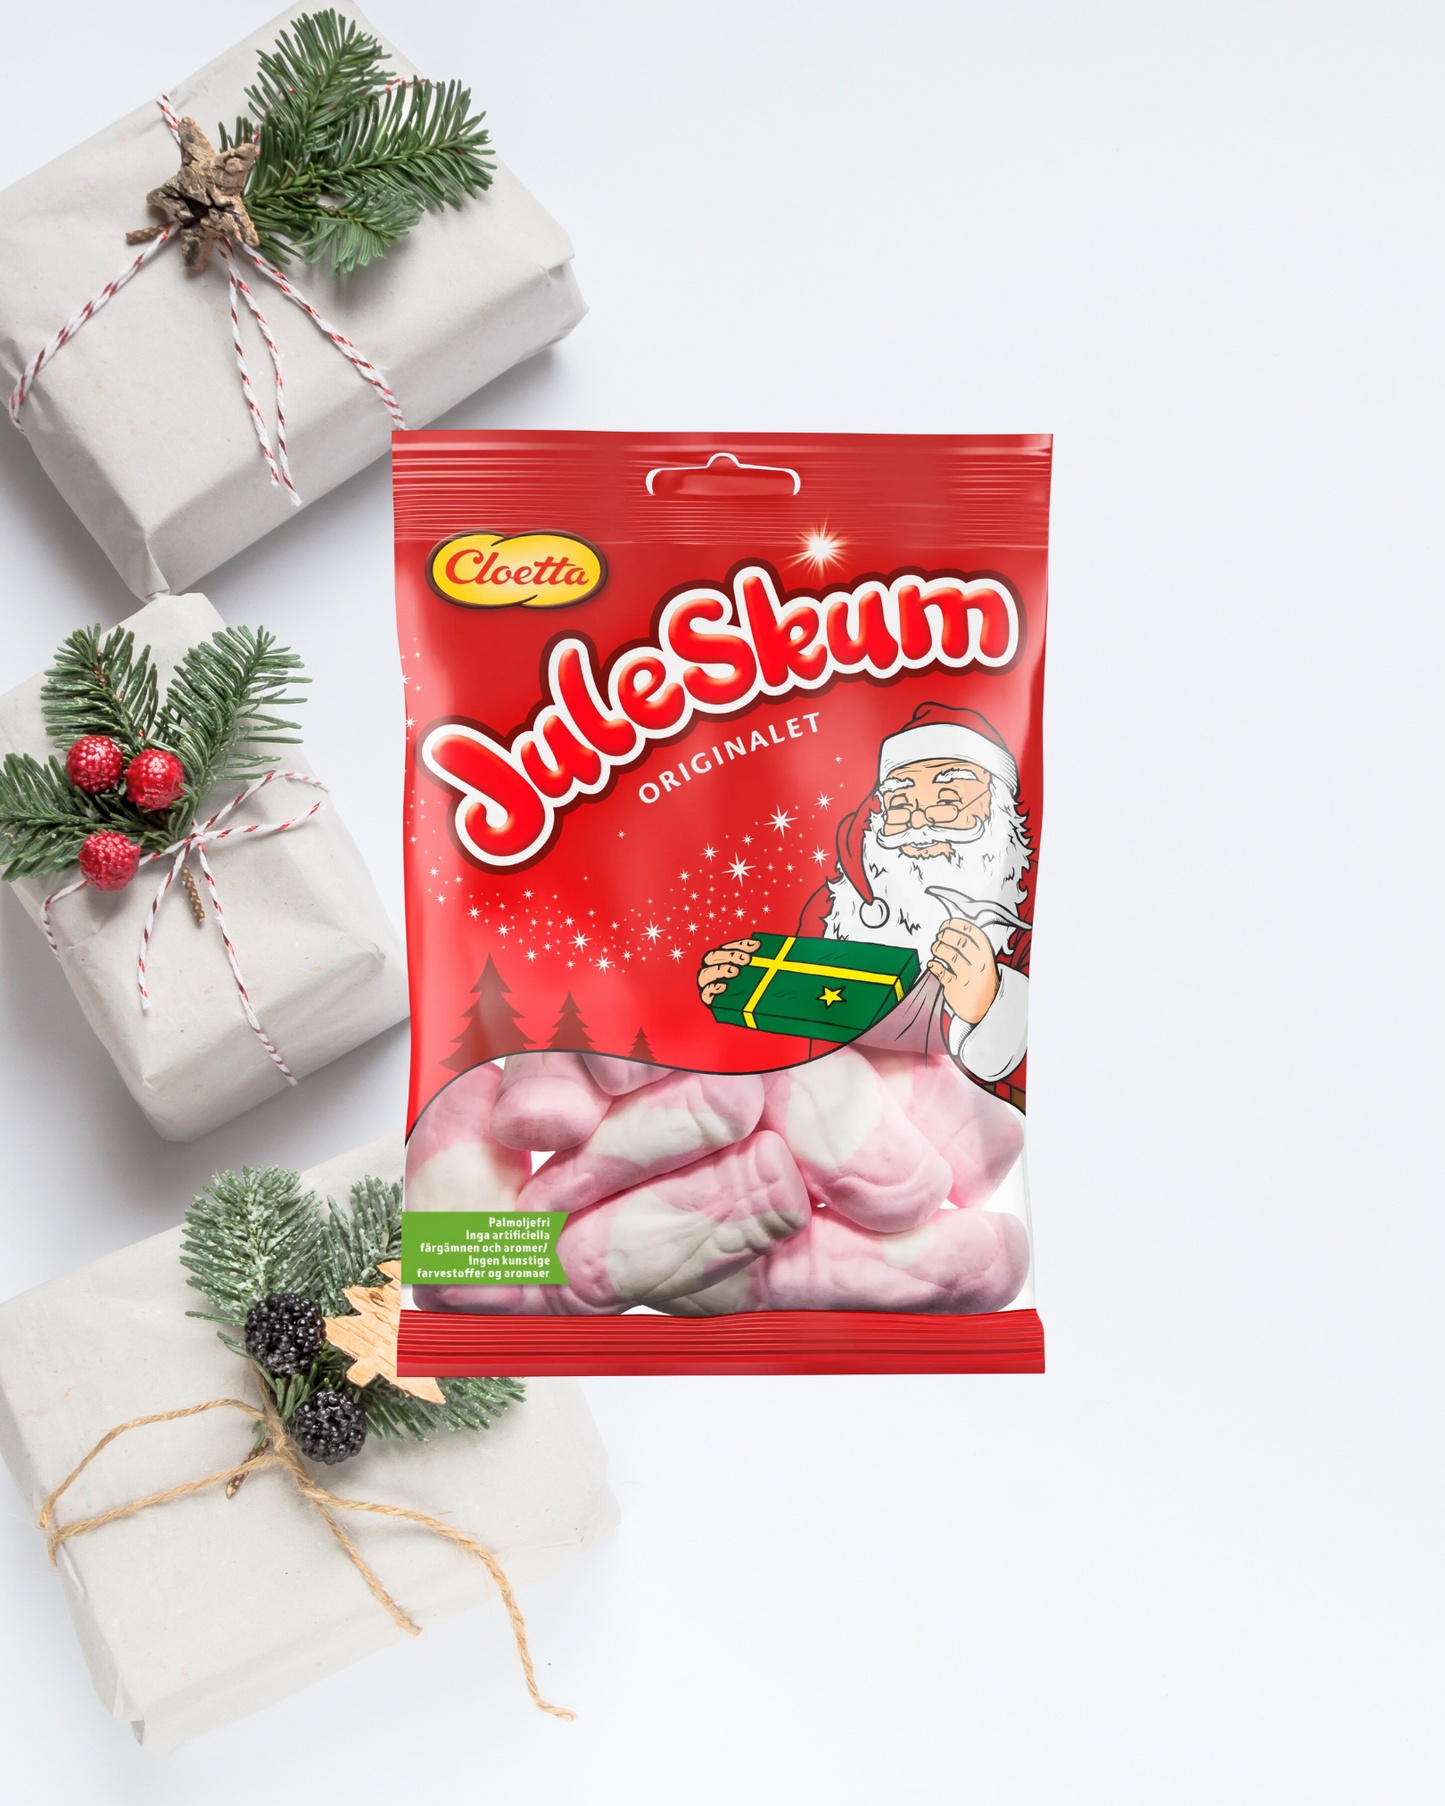 Cloetta Christmas Juleskum - Swedish Christmas Foam 100 grams (3.5 oz)